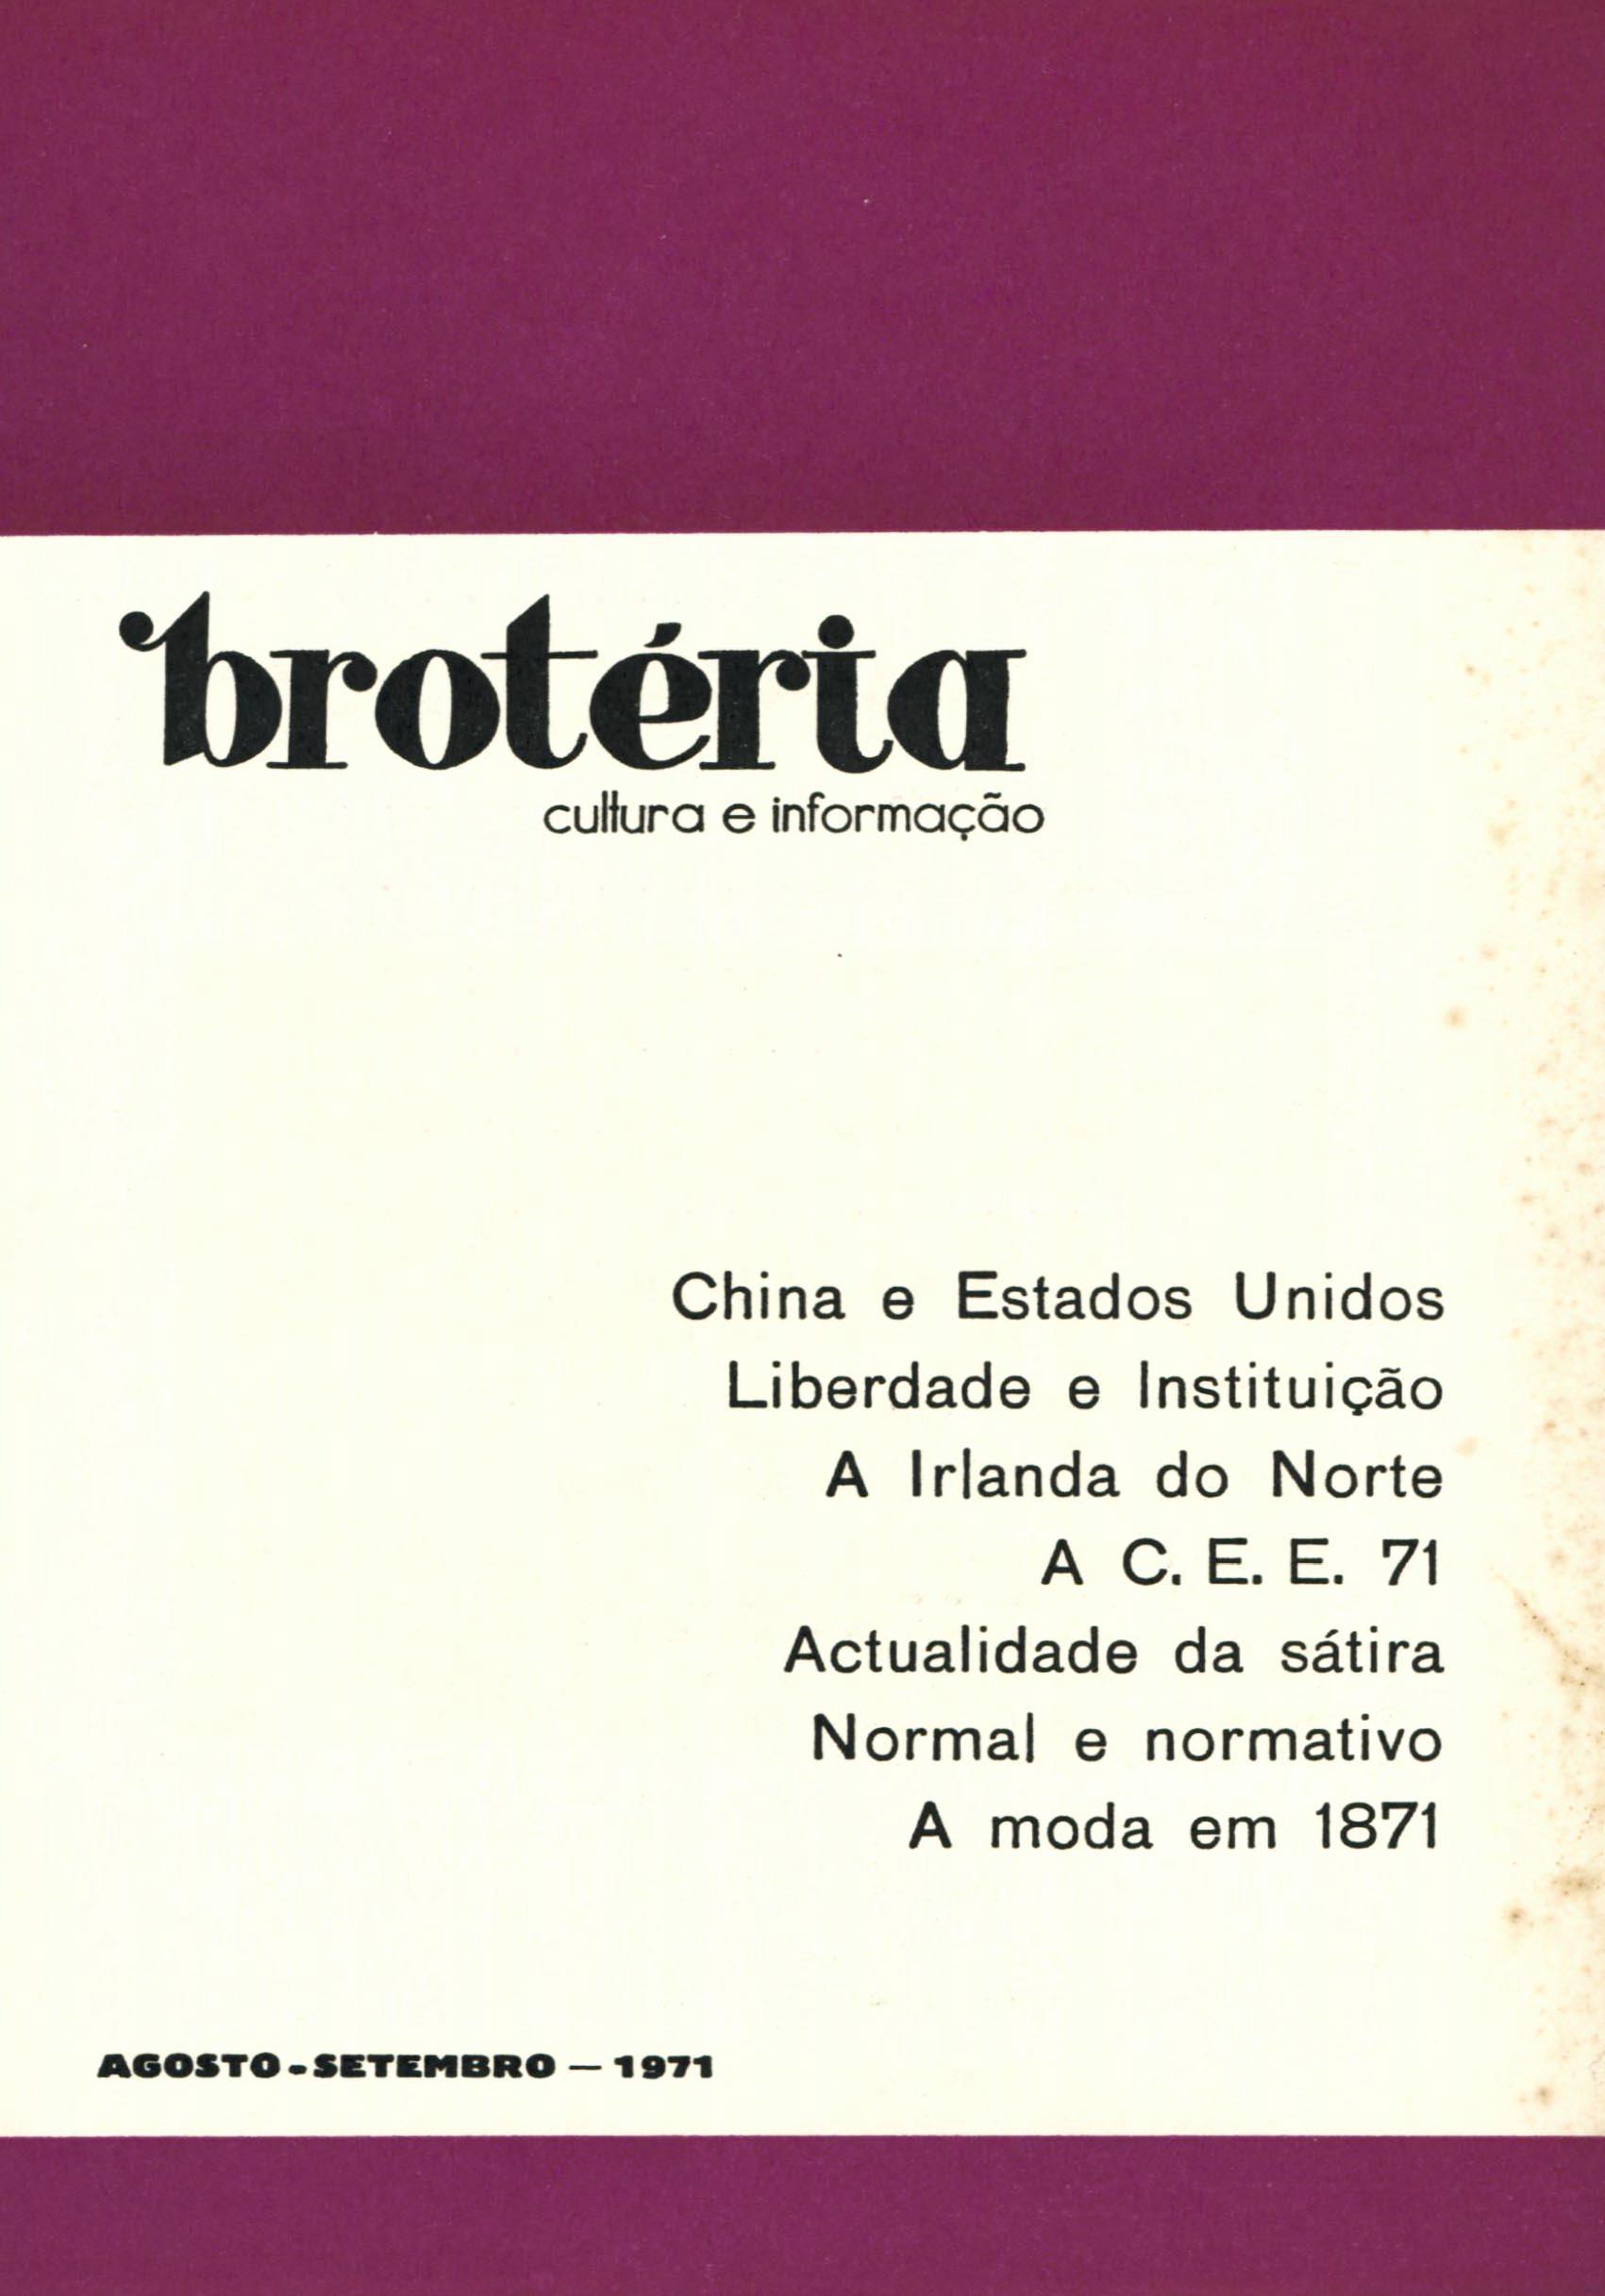 Broteria_Cultura_1971_capa